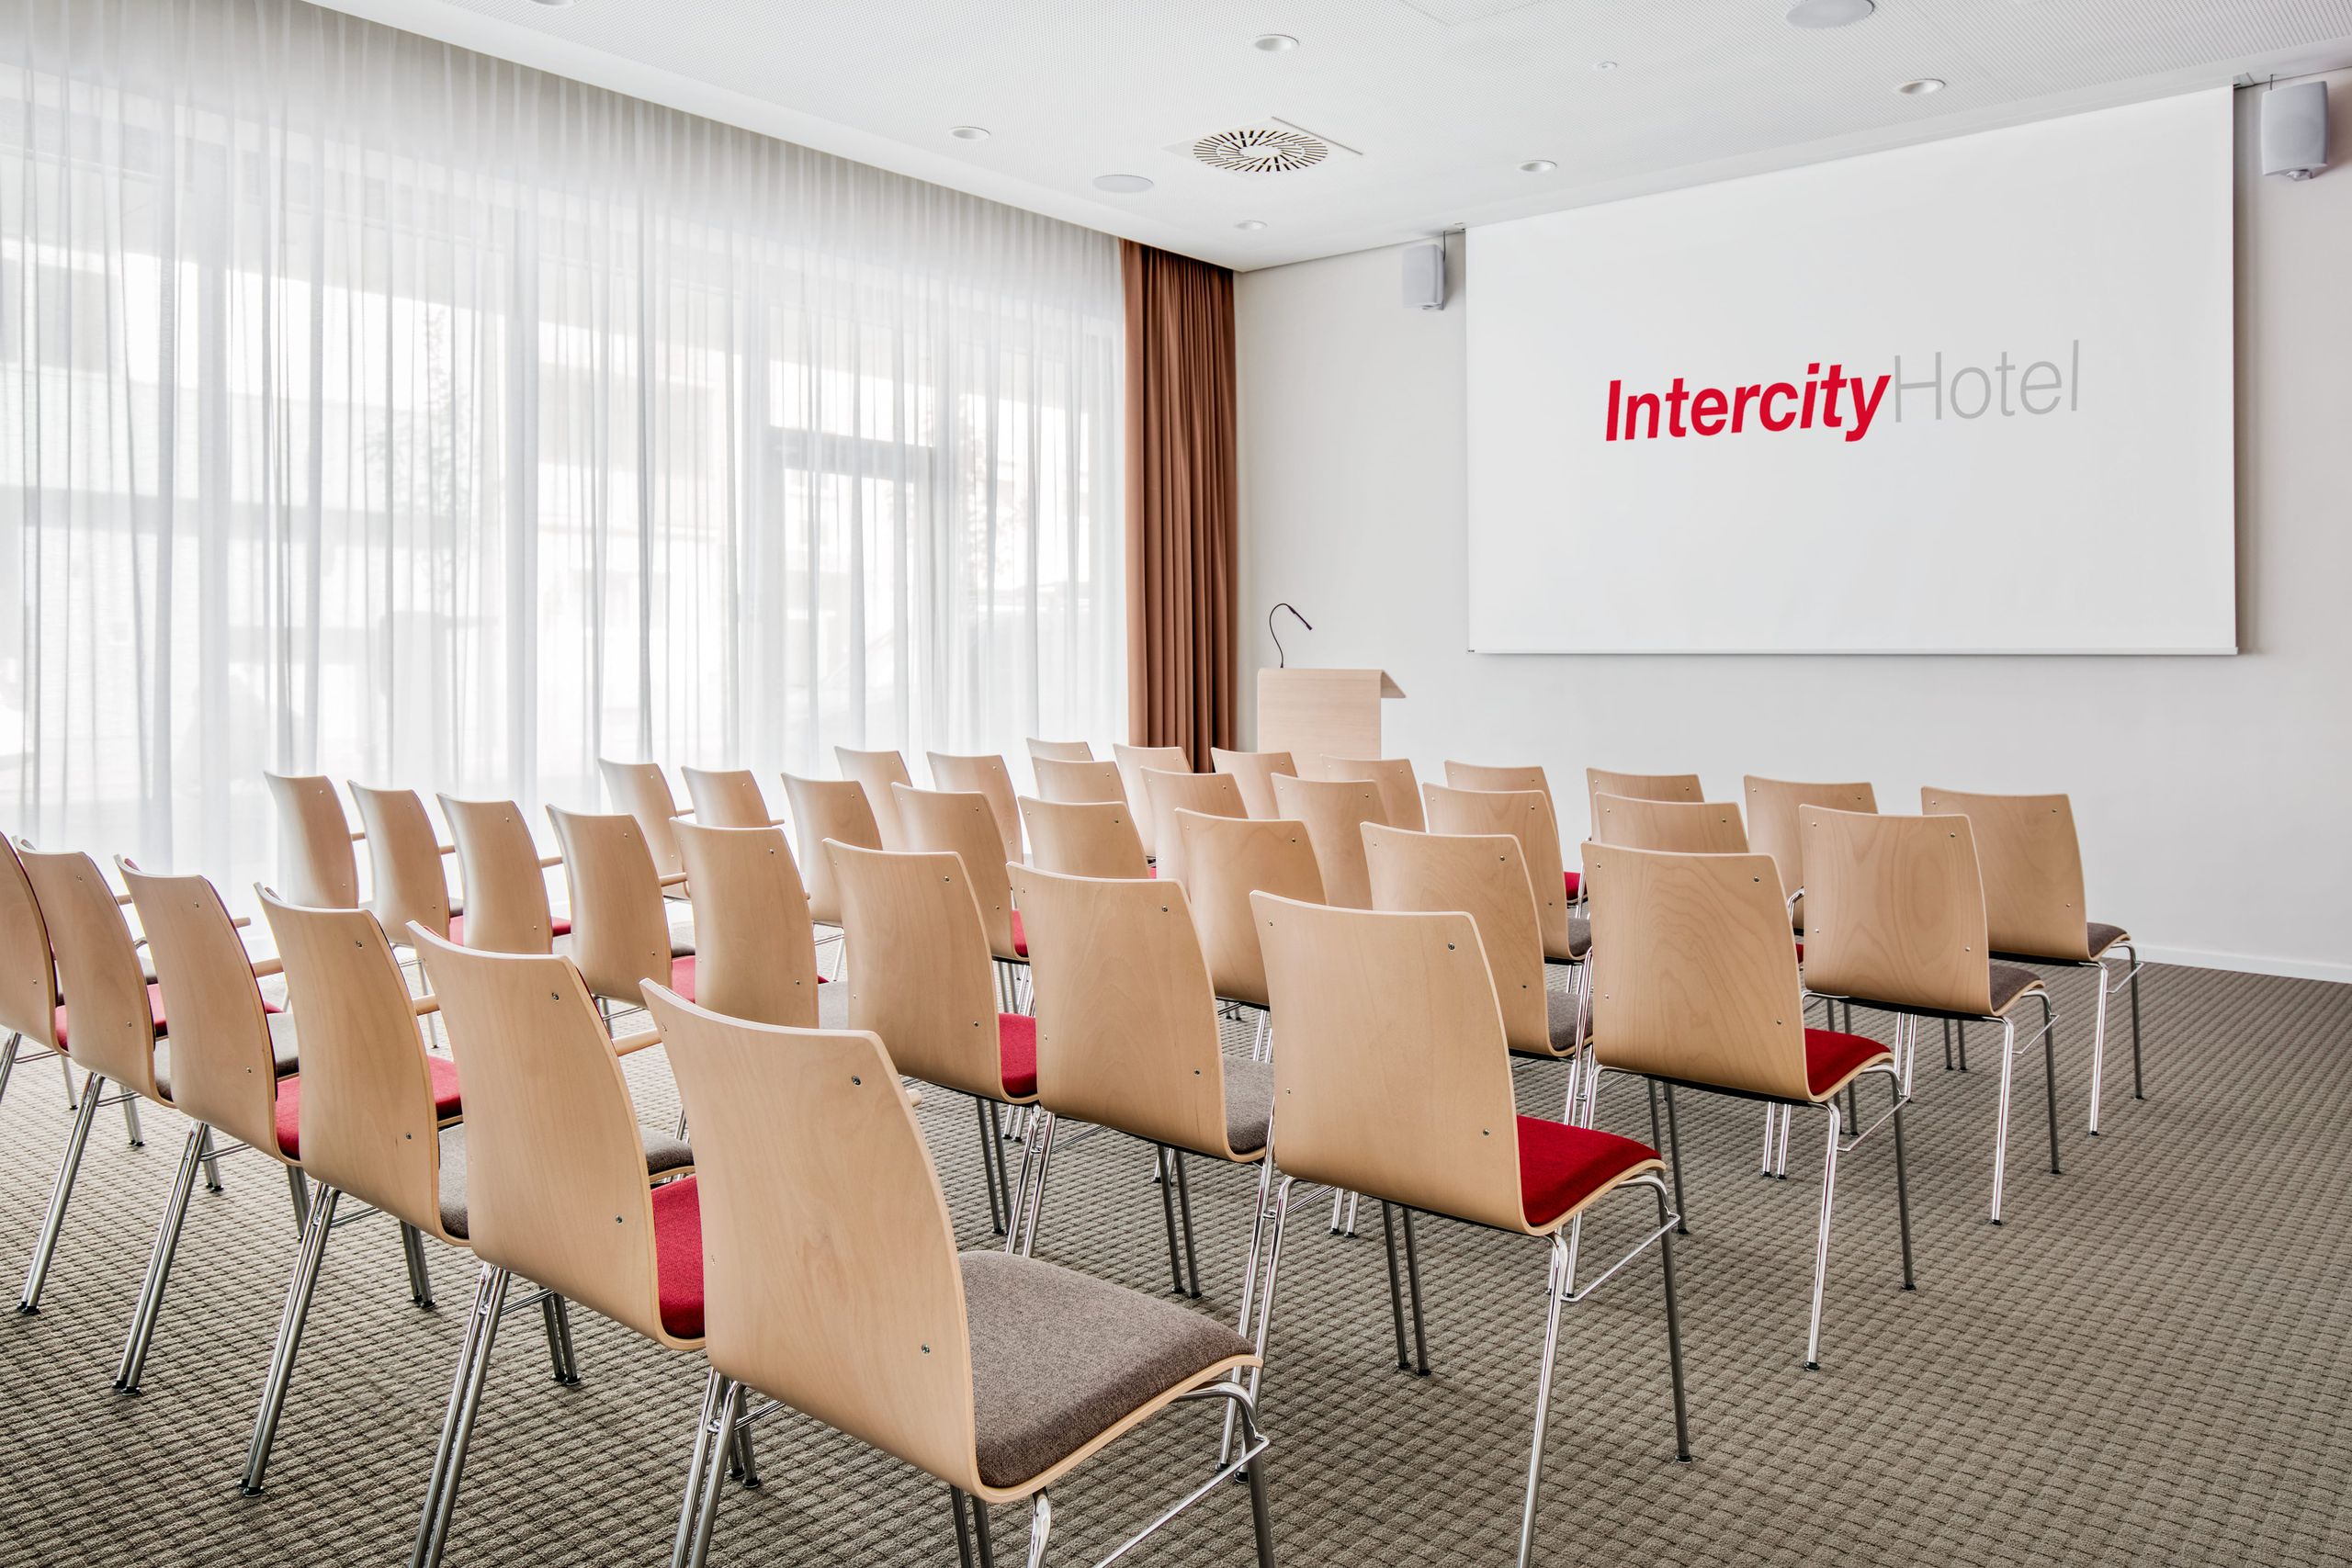 Konferenciatermek a IntercityHotel Grazban